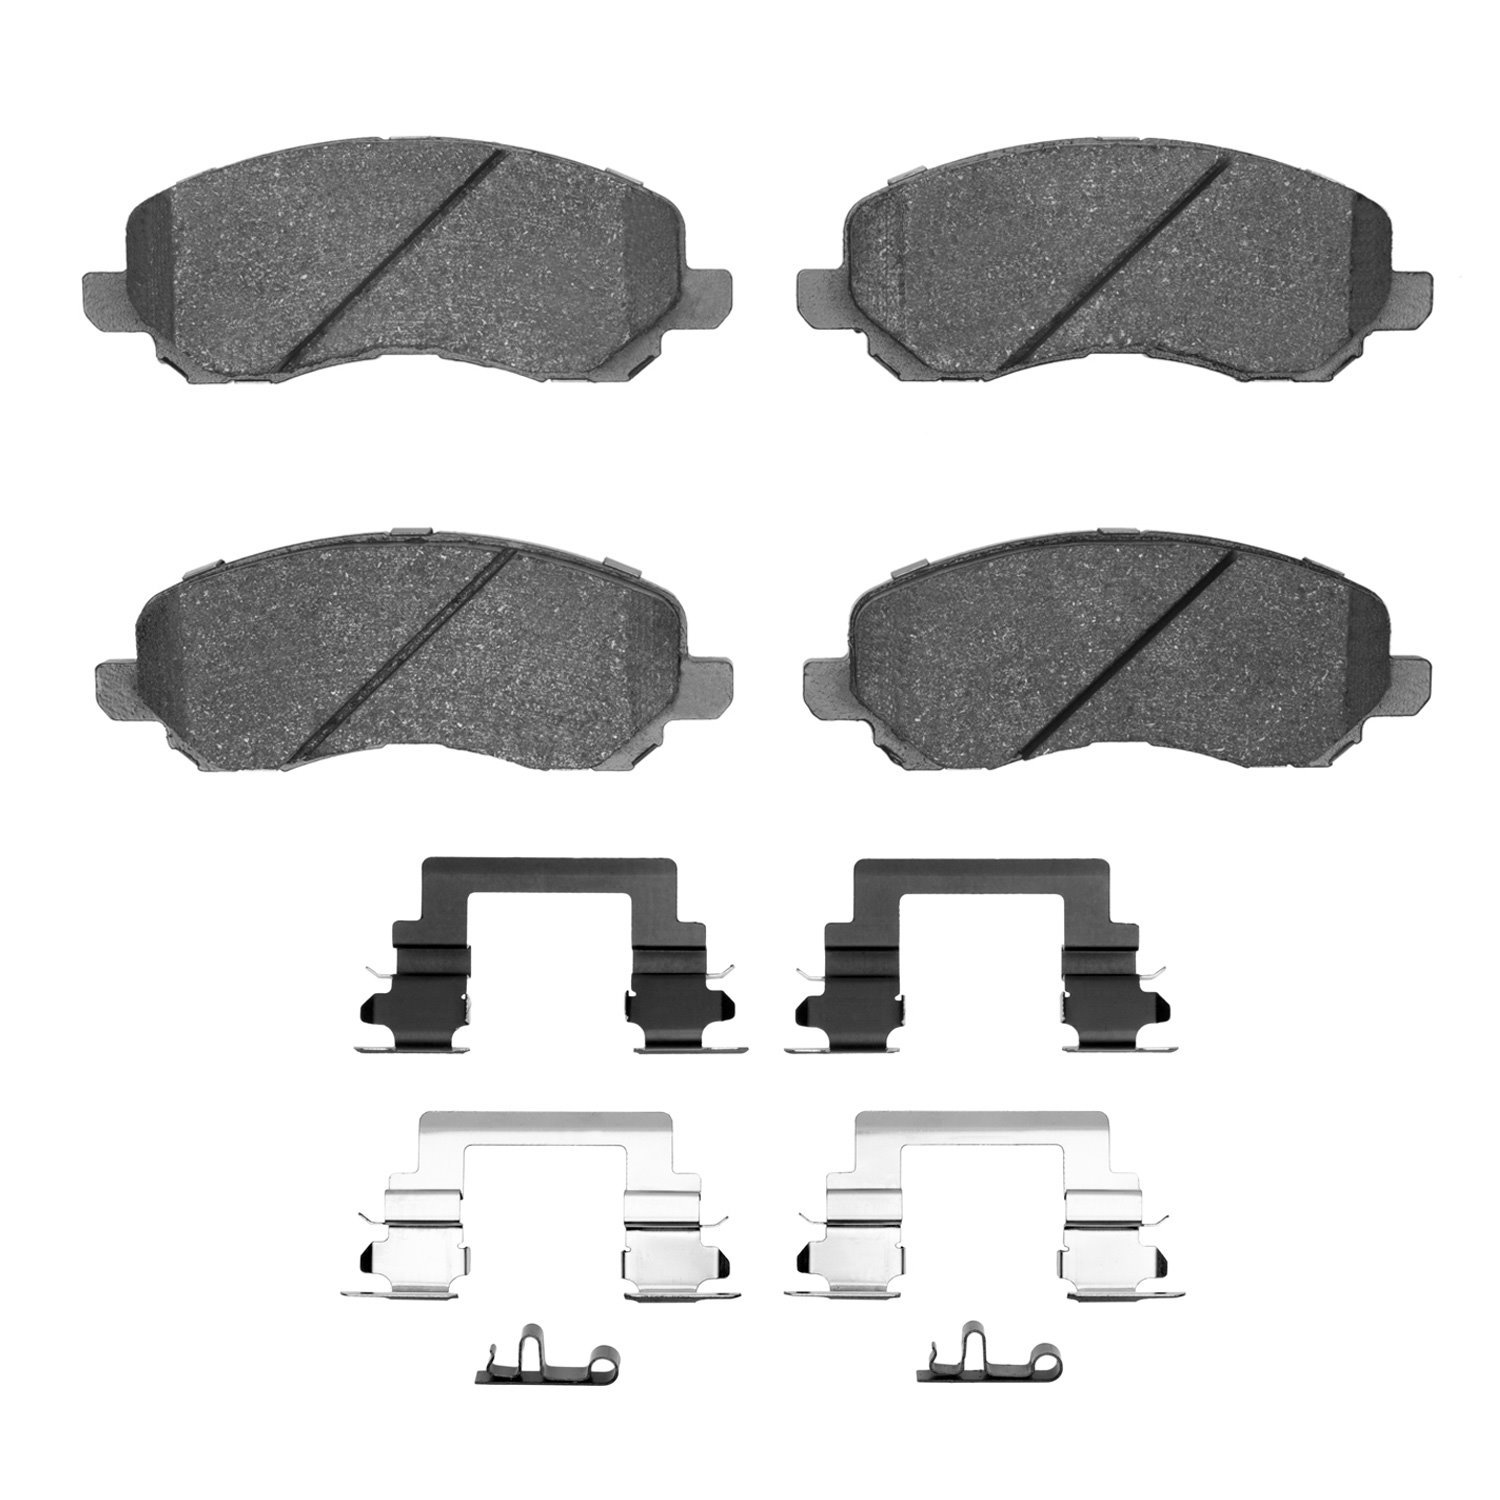 1115-0866-01 Active Performance Brake Pads & Hardware Kit, Fits Select Multiple Makes/Models, Position: Front